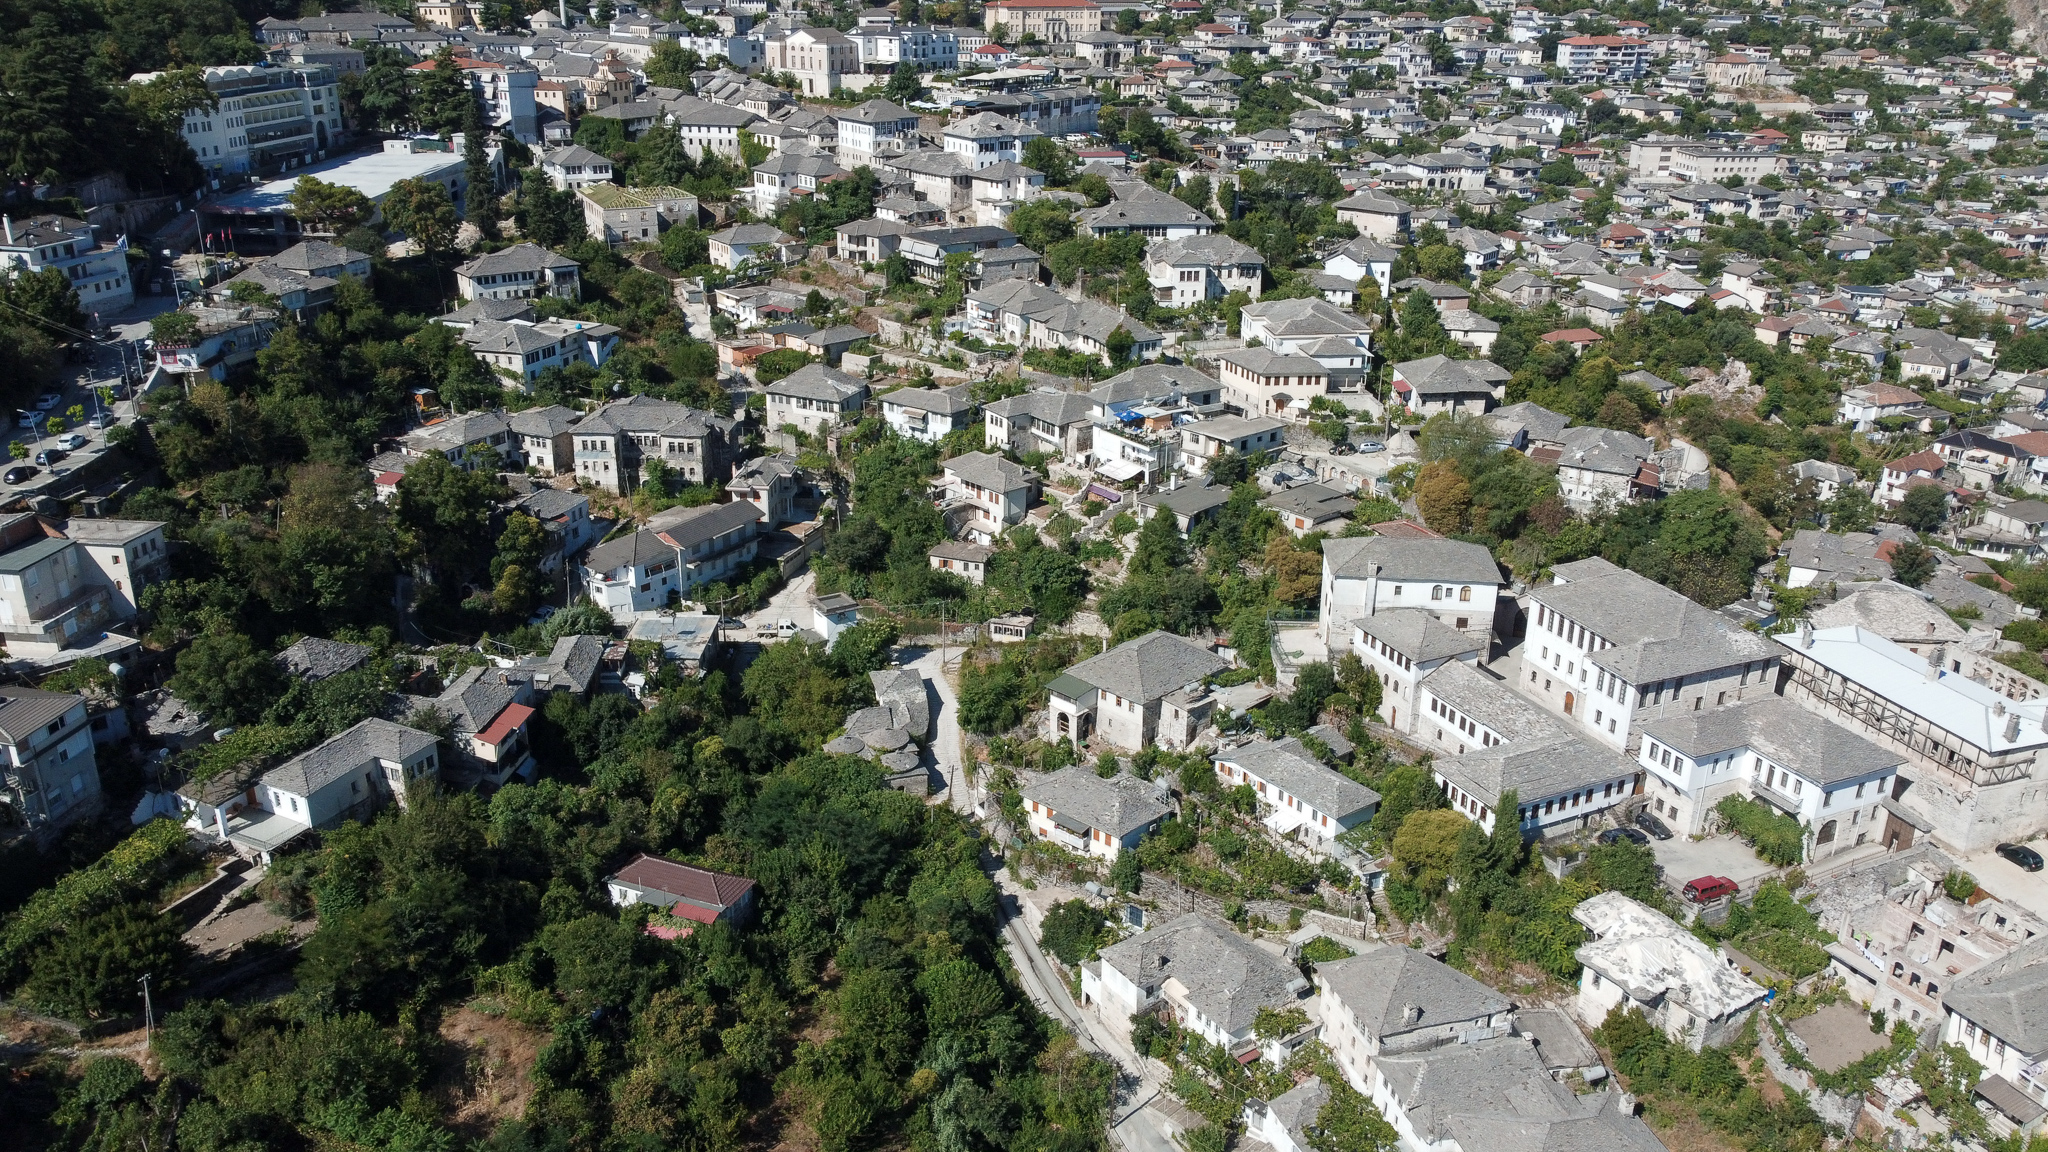 Gjirokaster Old Town Albania